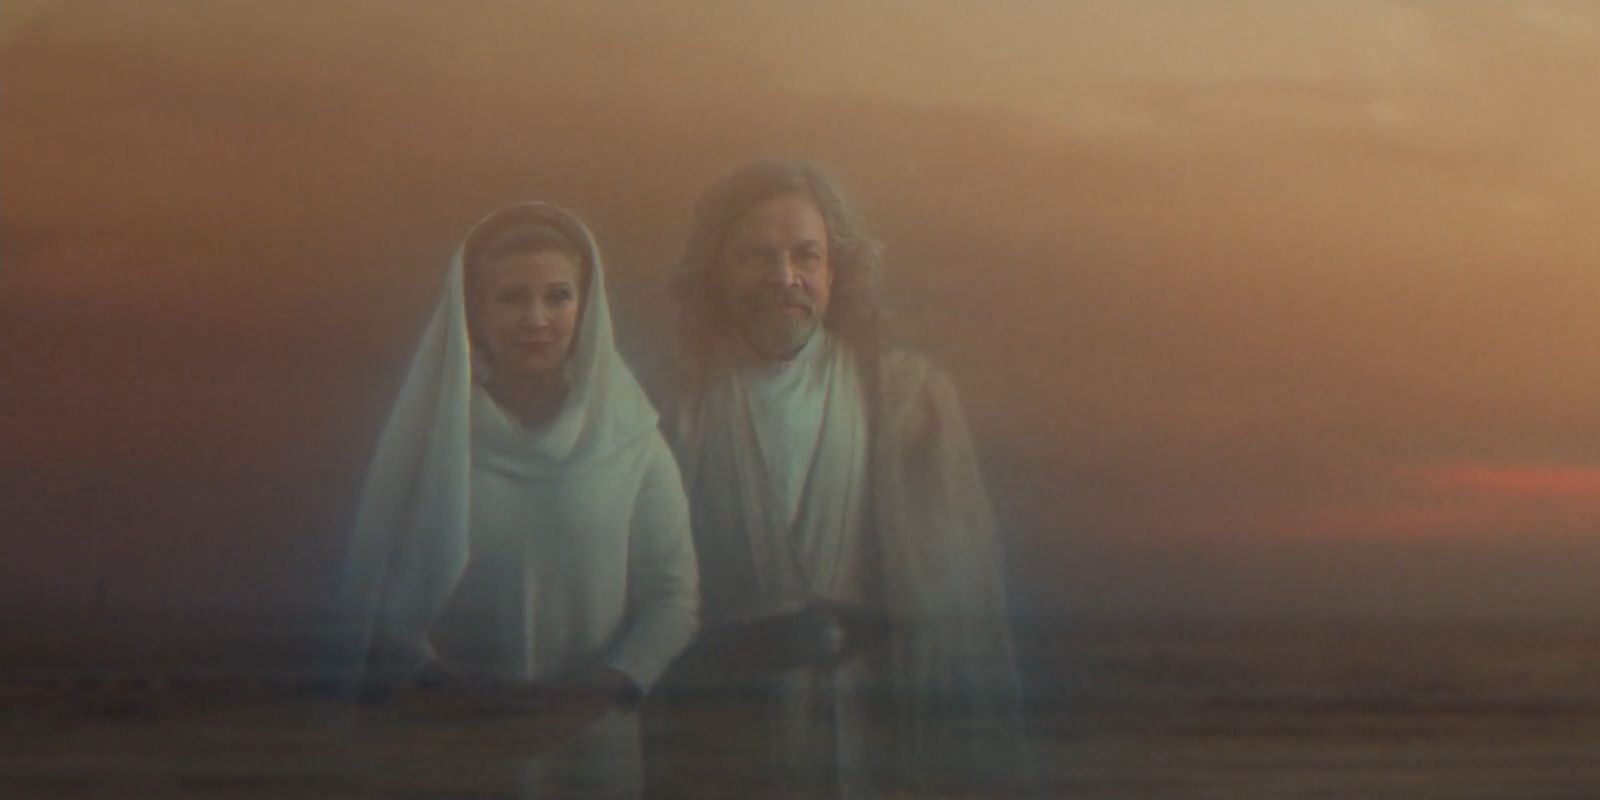 Leia Organa and Luke Skywalker appear as Force ghosts in Star Wars.